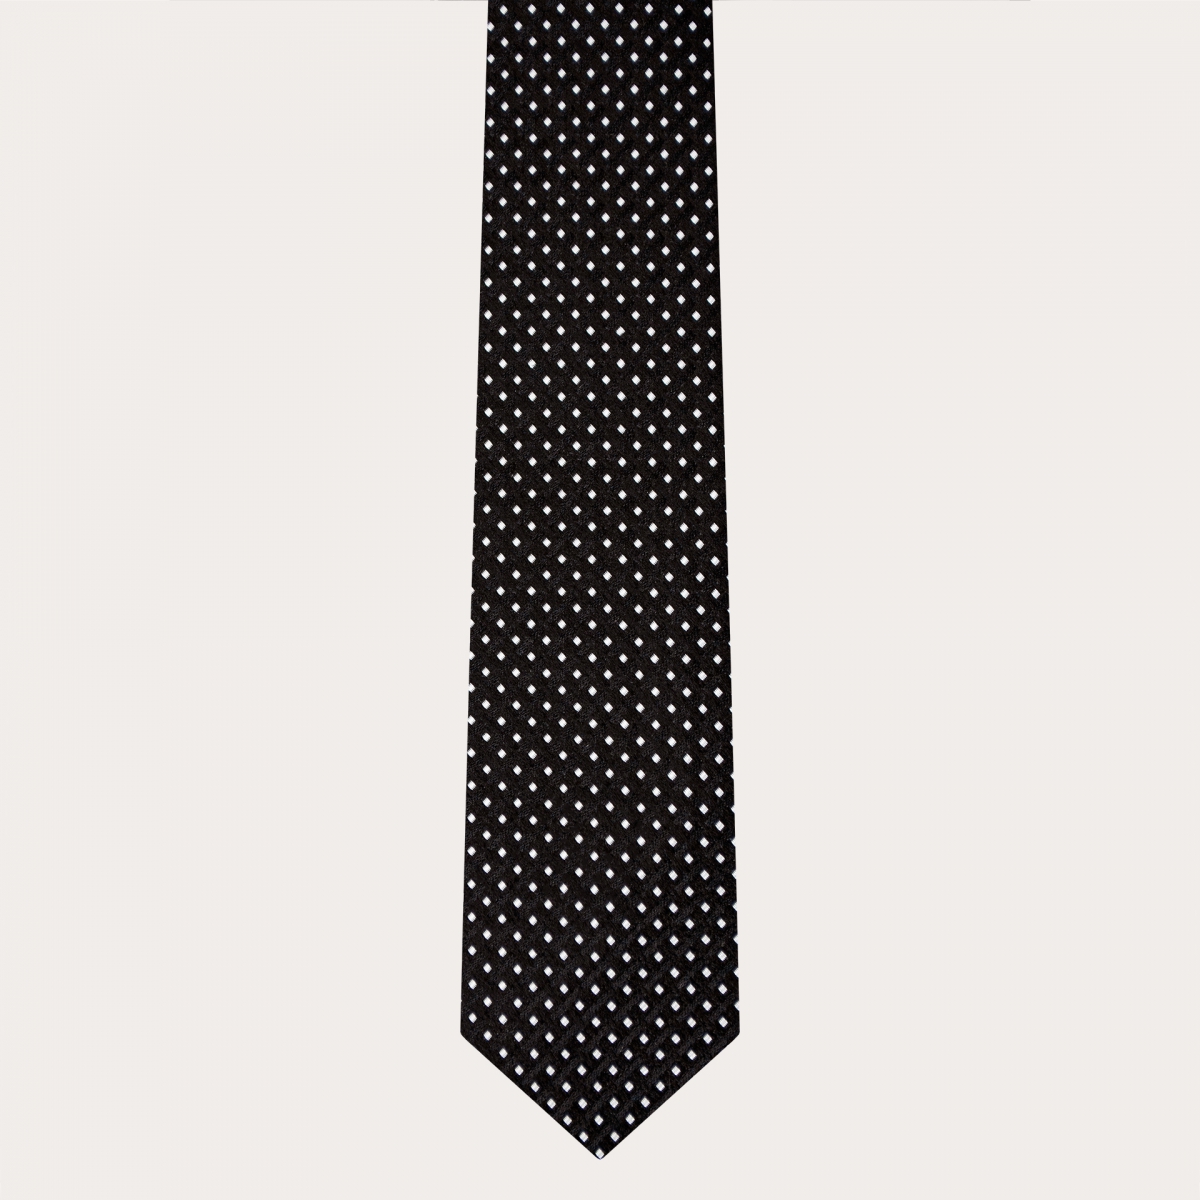 Elegante cravatta in seta jacquard, nero con motivo geometrico puntaspillo